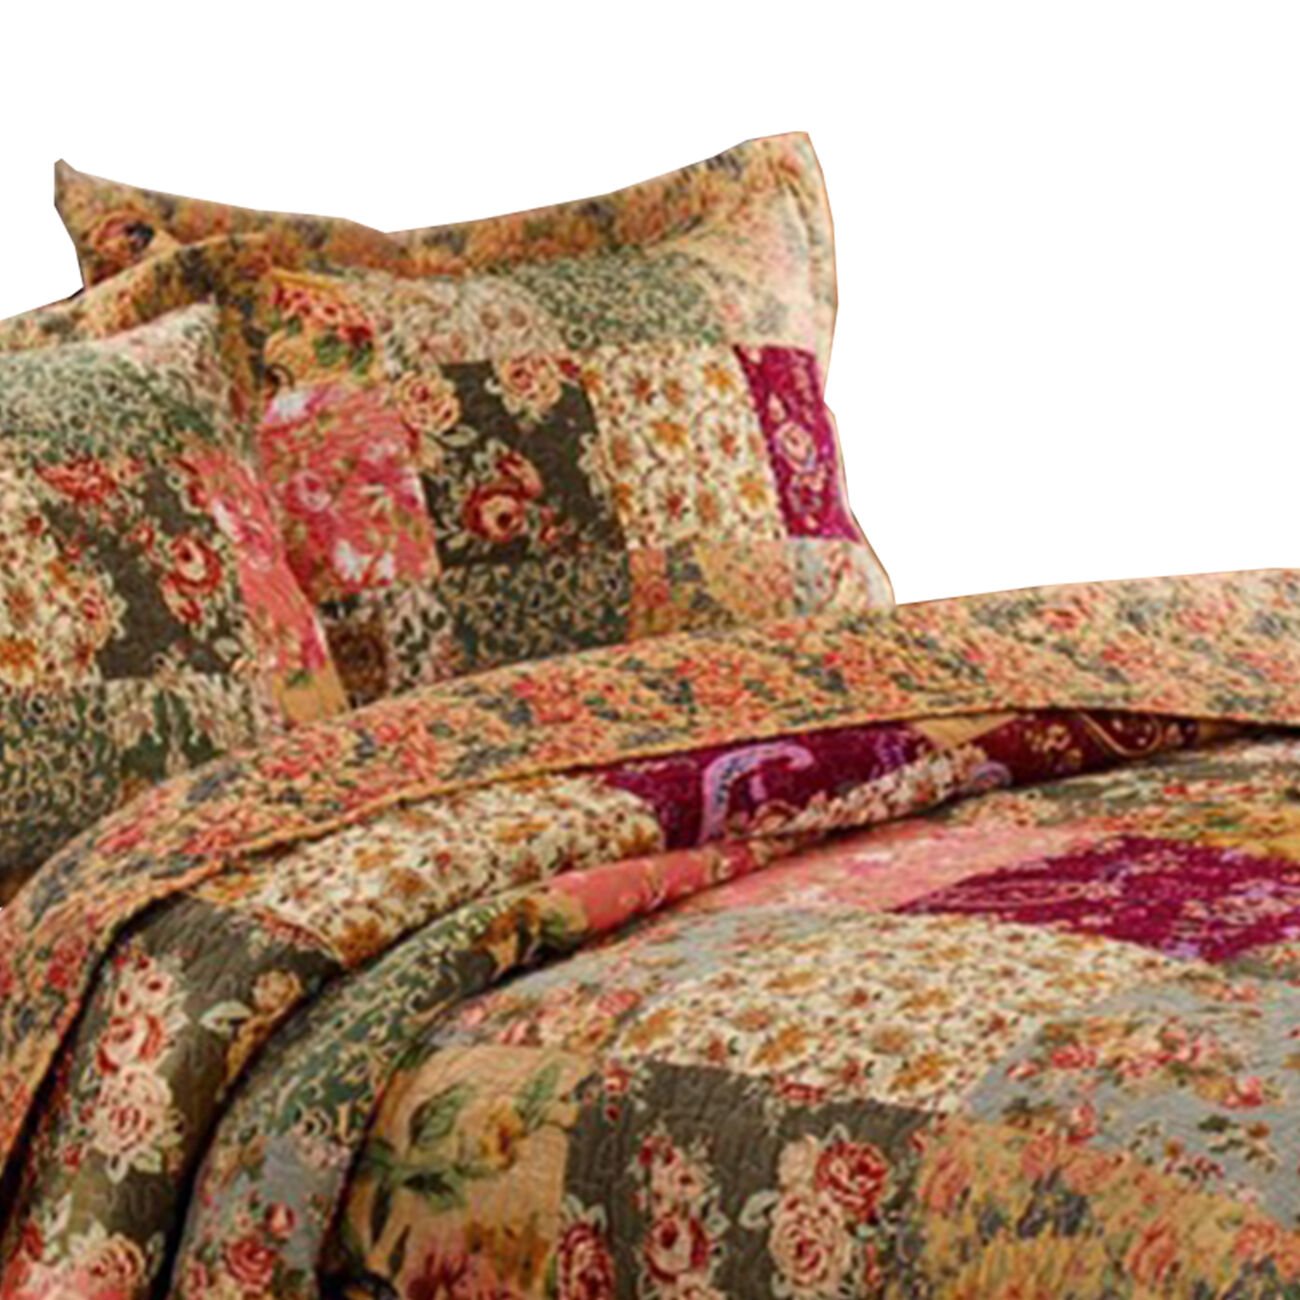 Kamet 3 Piece Fabric King Size Bedspread Set with Floral Prints, Multicolor